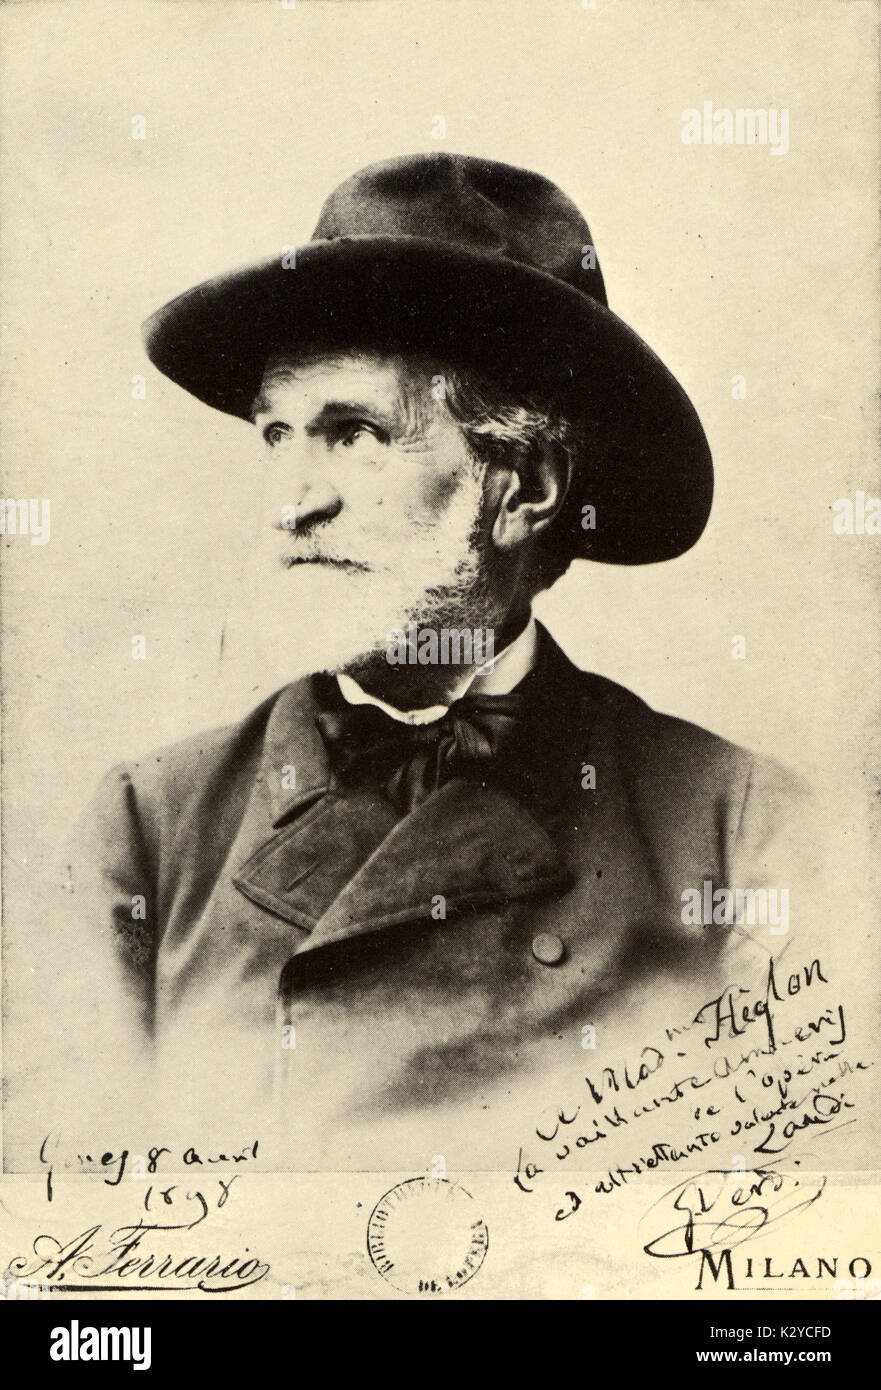 Giuseppe Verdi - portrait with hat. Signed 1898 Italian composer (1813-1901) Stock Photo